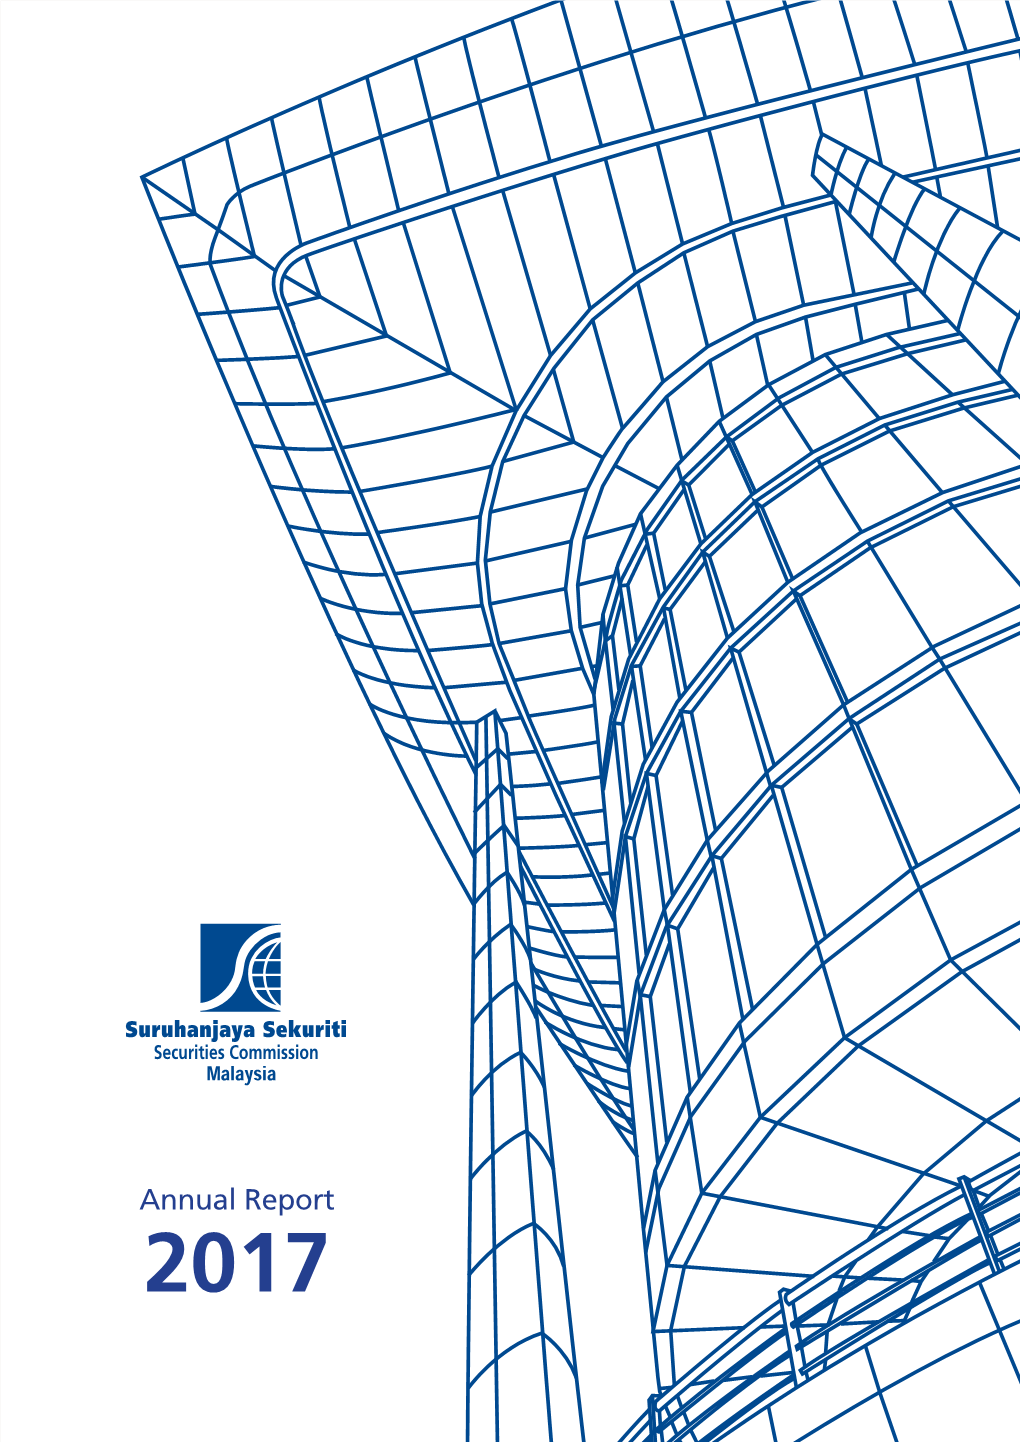 Annual Report 2017 Mission Statement